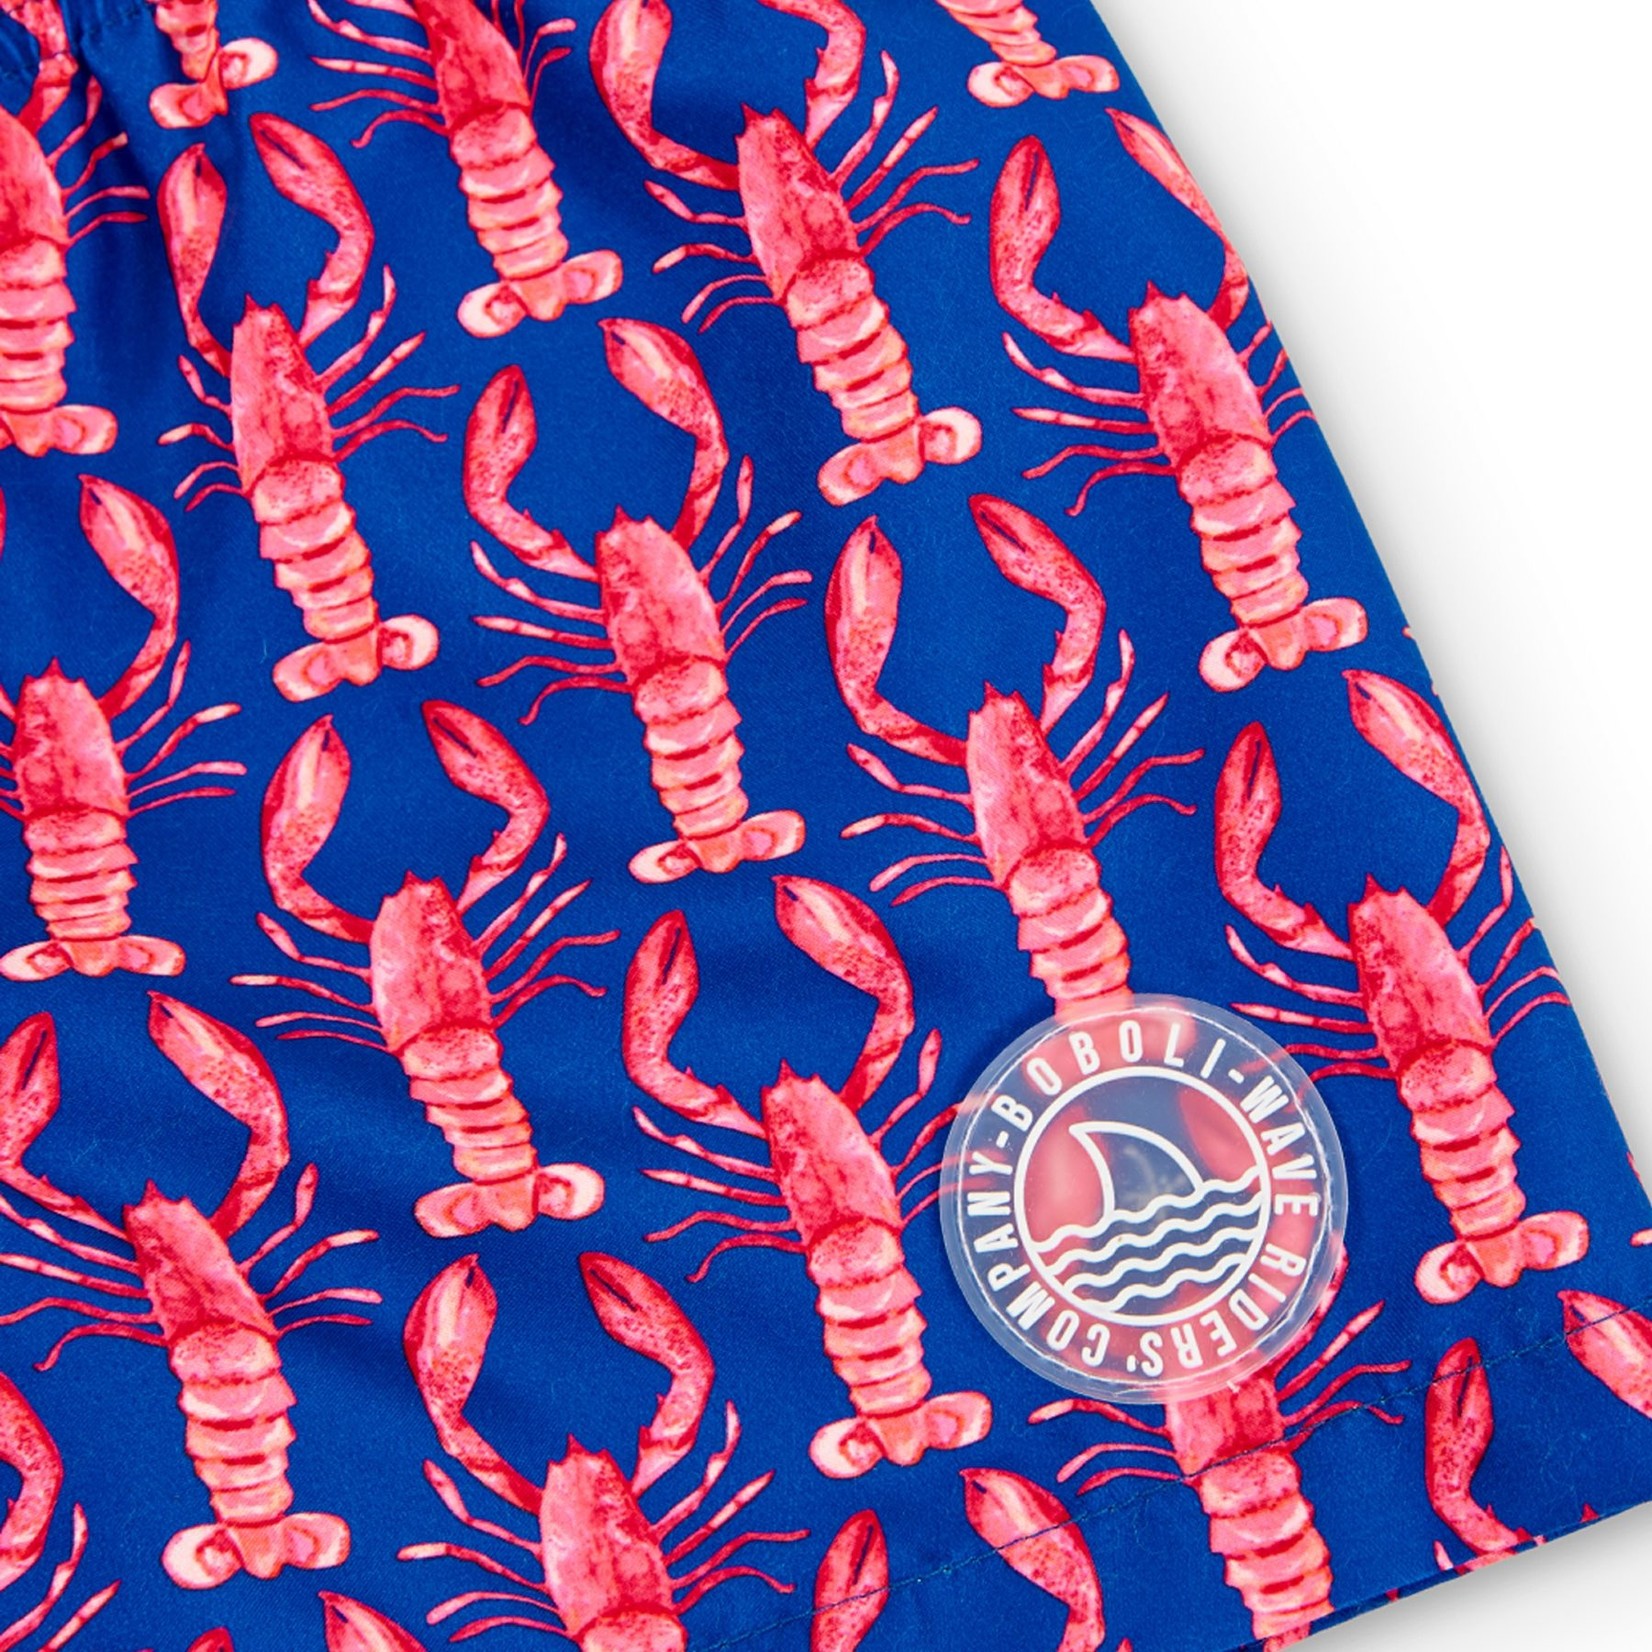 Boboli BOBOLI - Bathing short with lobster print